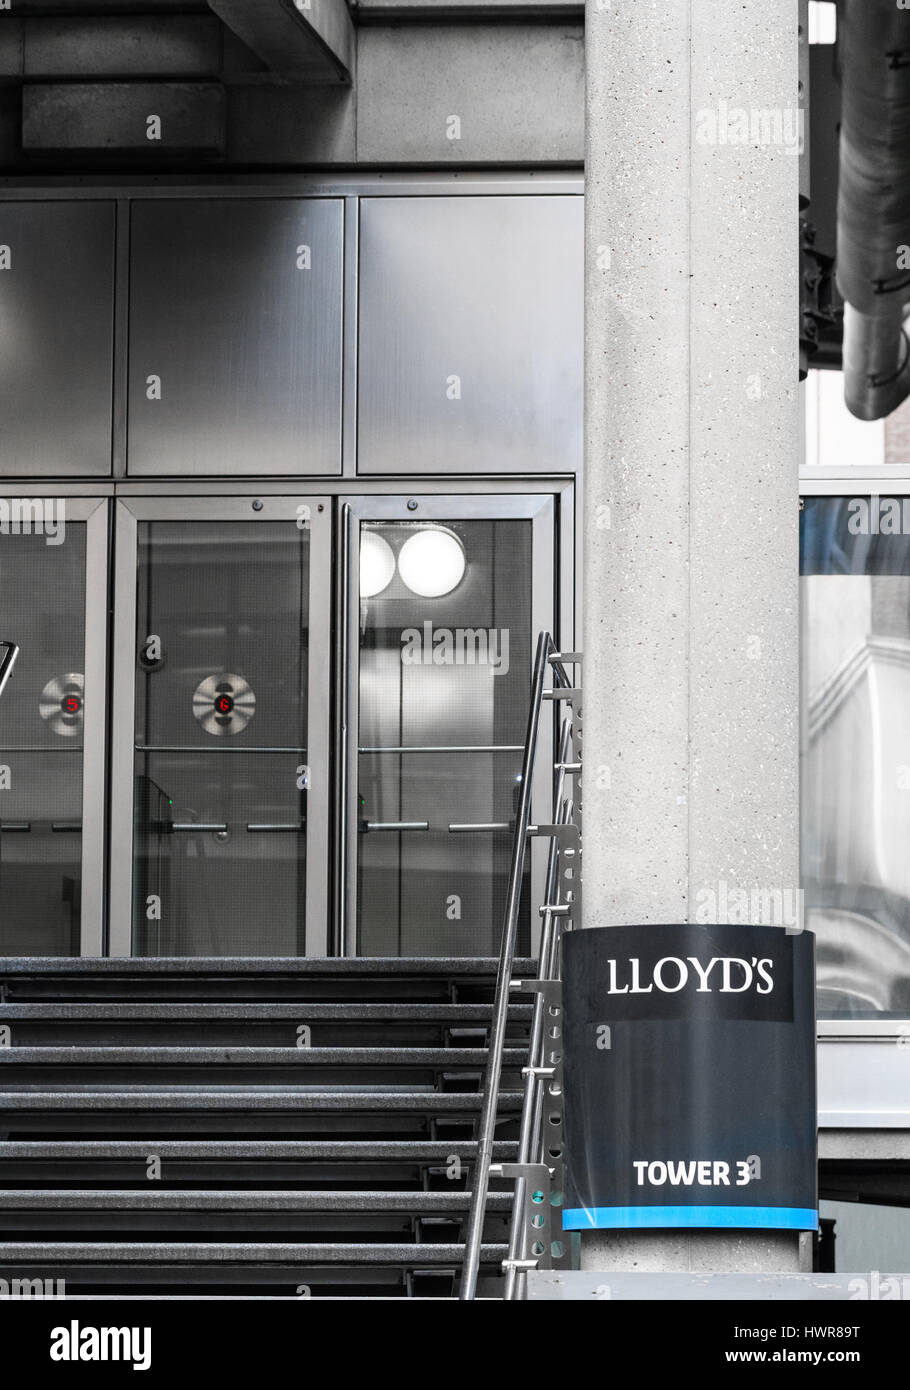 Lloyds insurance building, City of London, England. Stock Photo